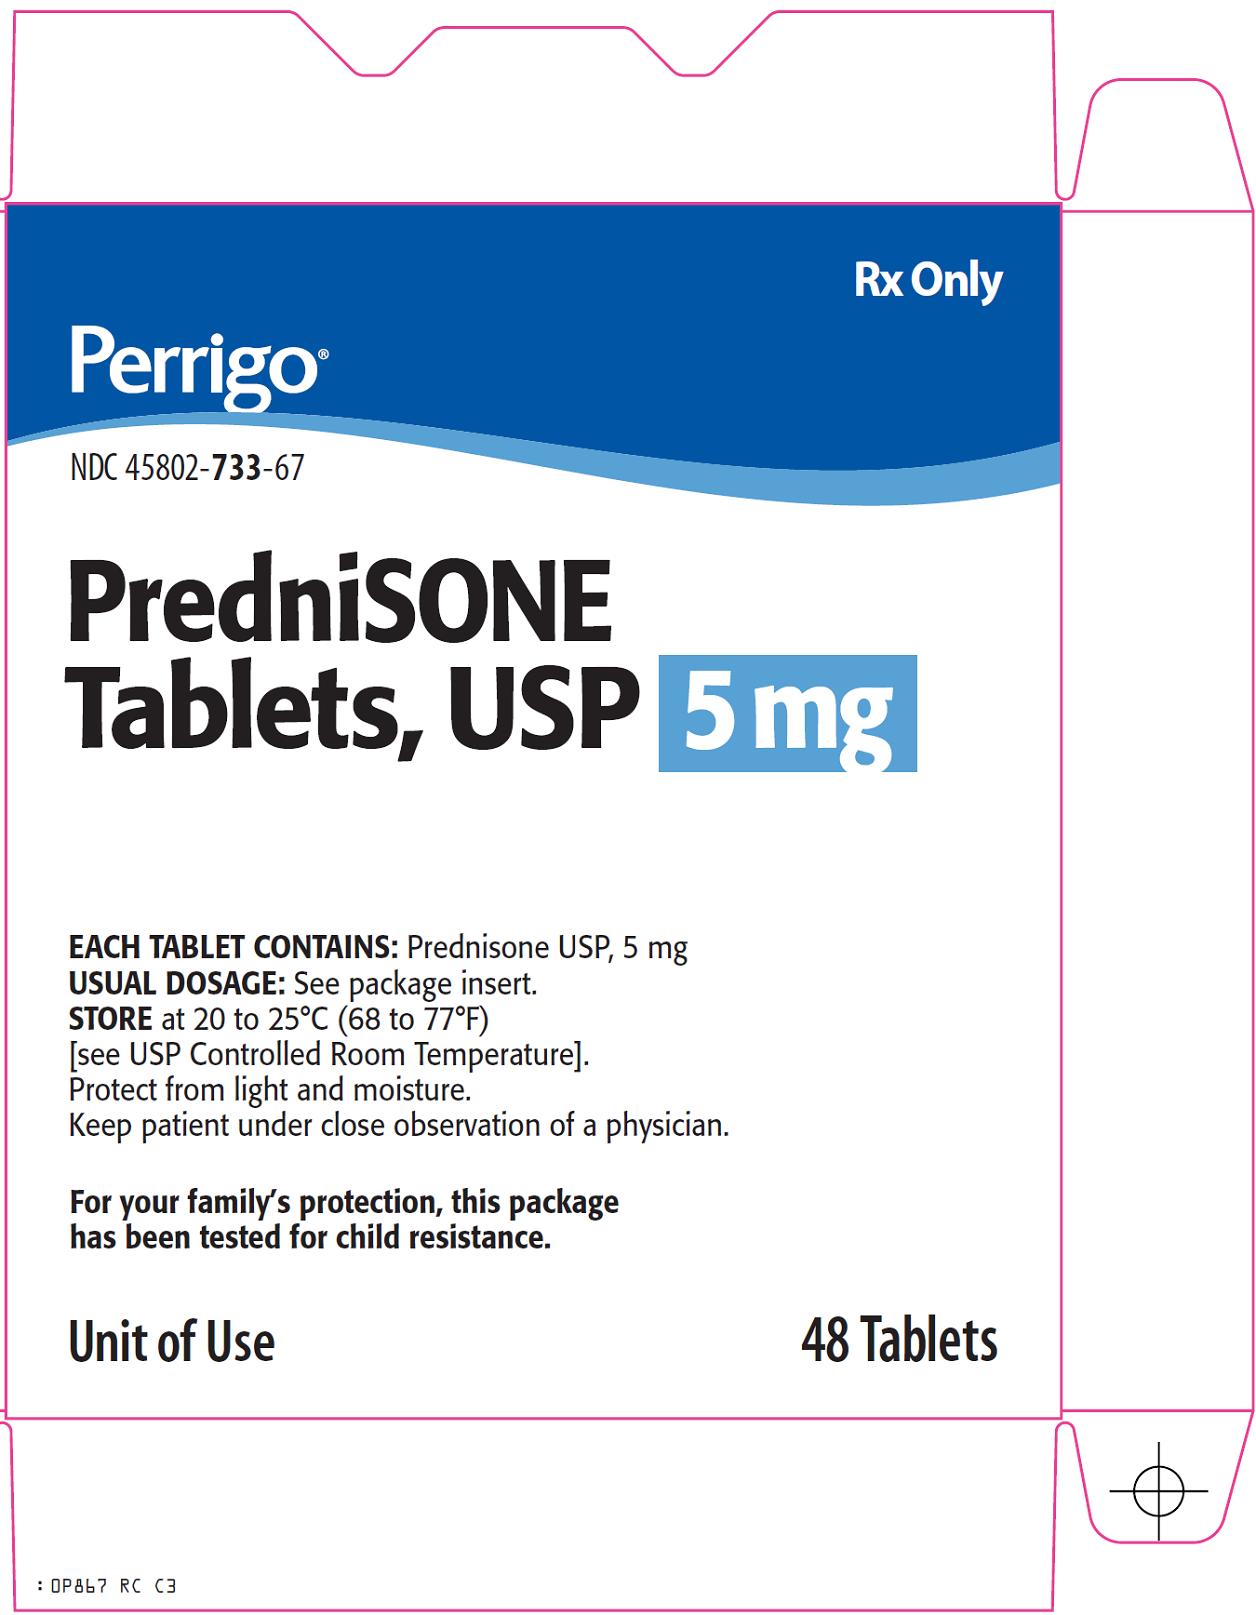 PredniSONE Tablets, USP Carton Image 1